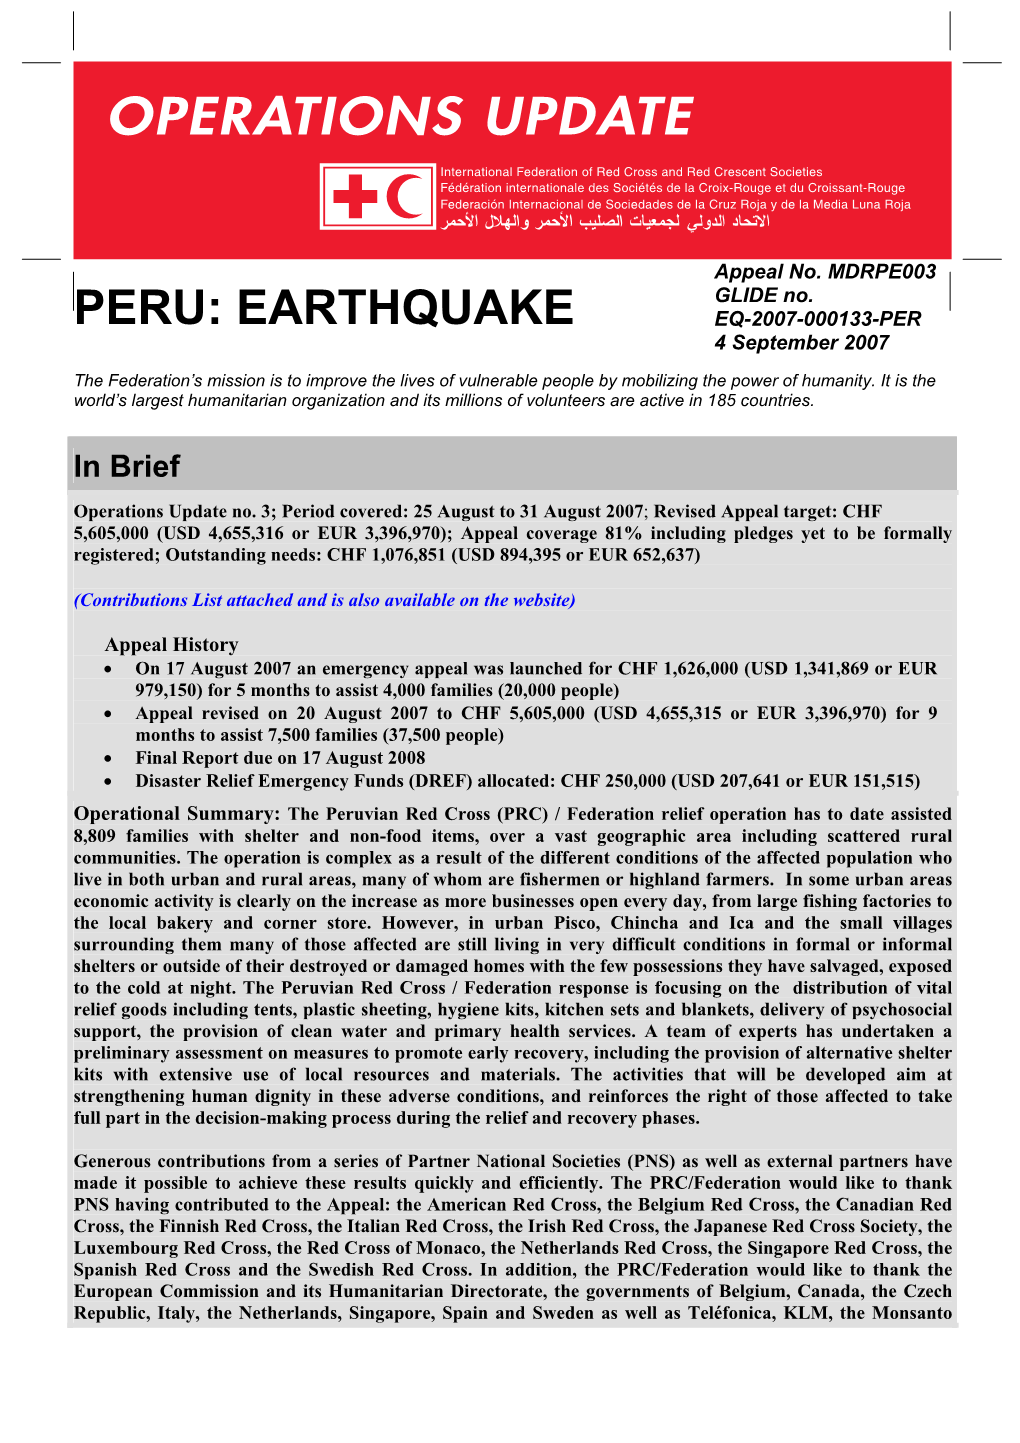 PERU: EARTHQUAKE EQ-2007-000133-PER 4 September 2007